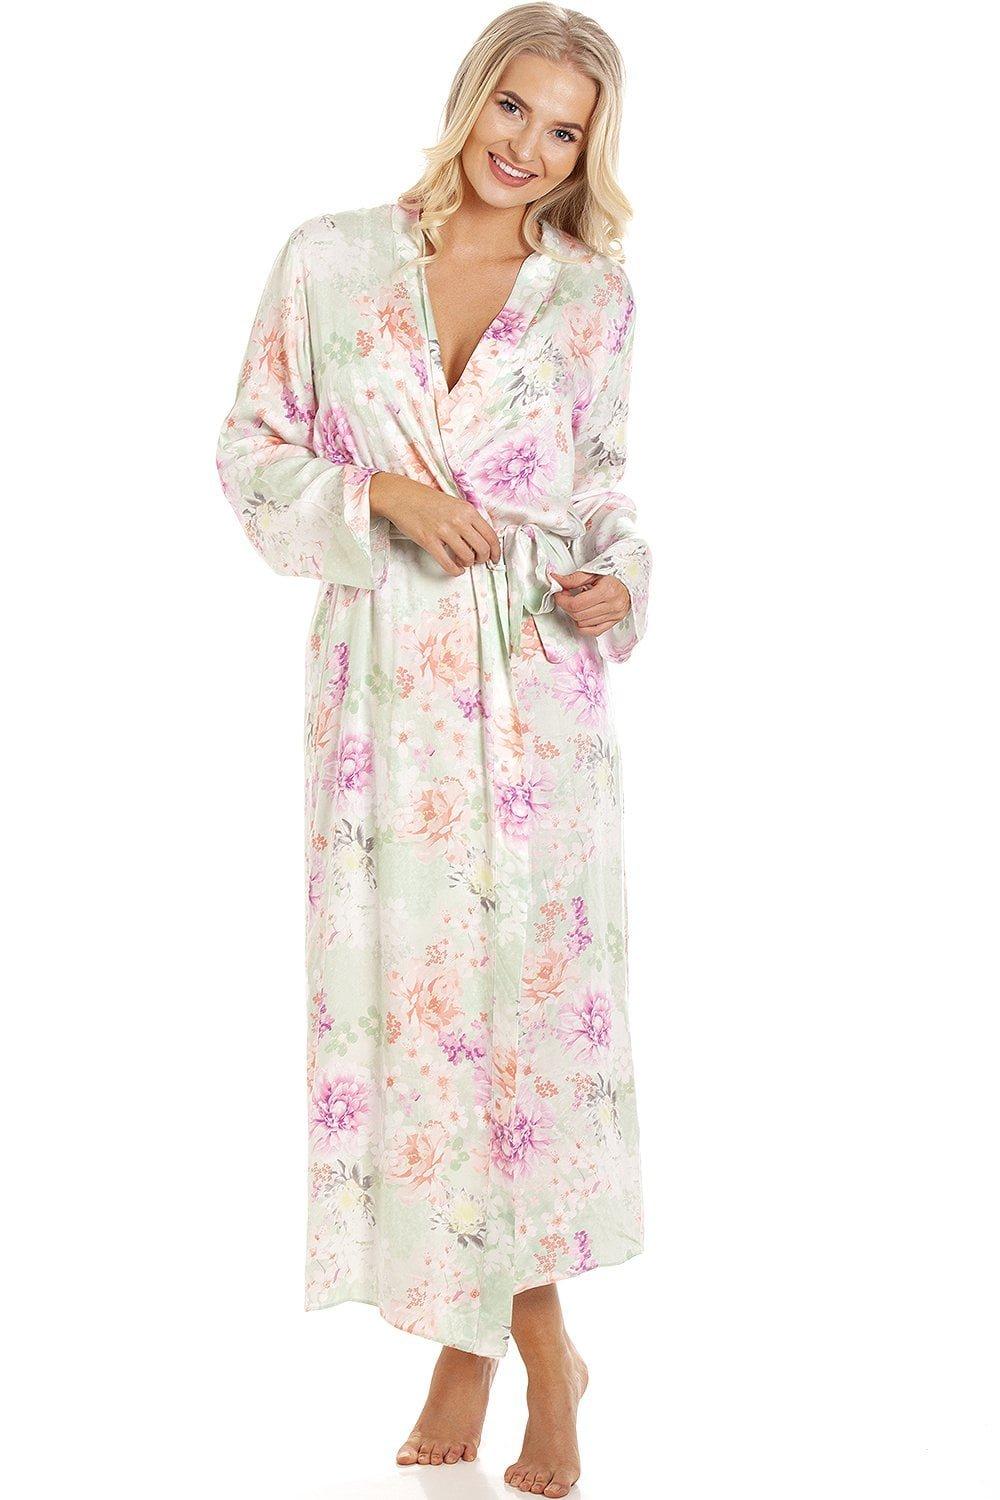 Matalan Ladies Dressing Gowns Factory Sale, Save 66% | jlcatj.gob.mx